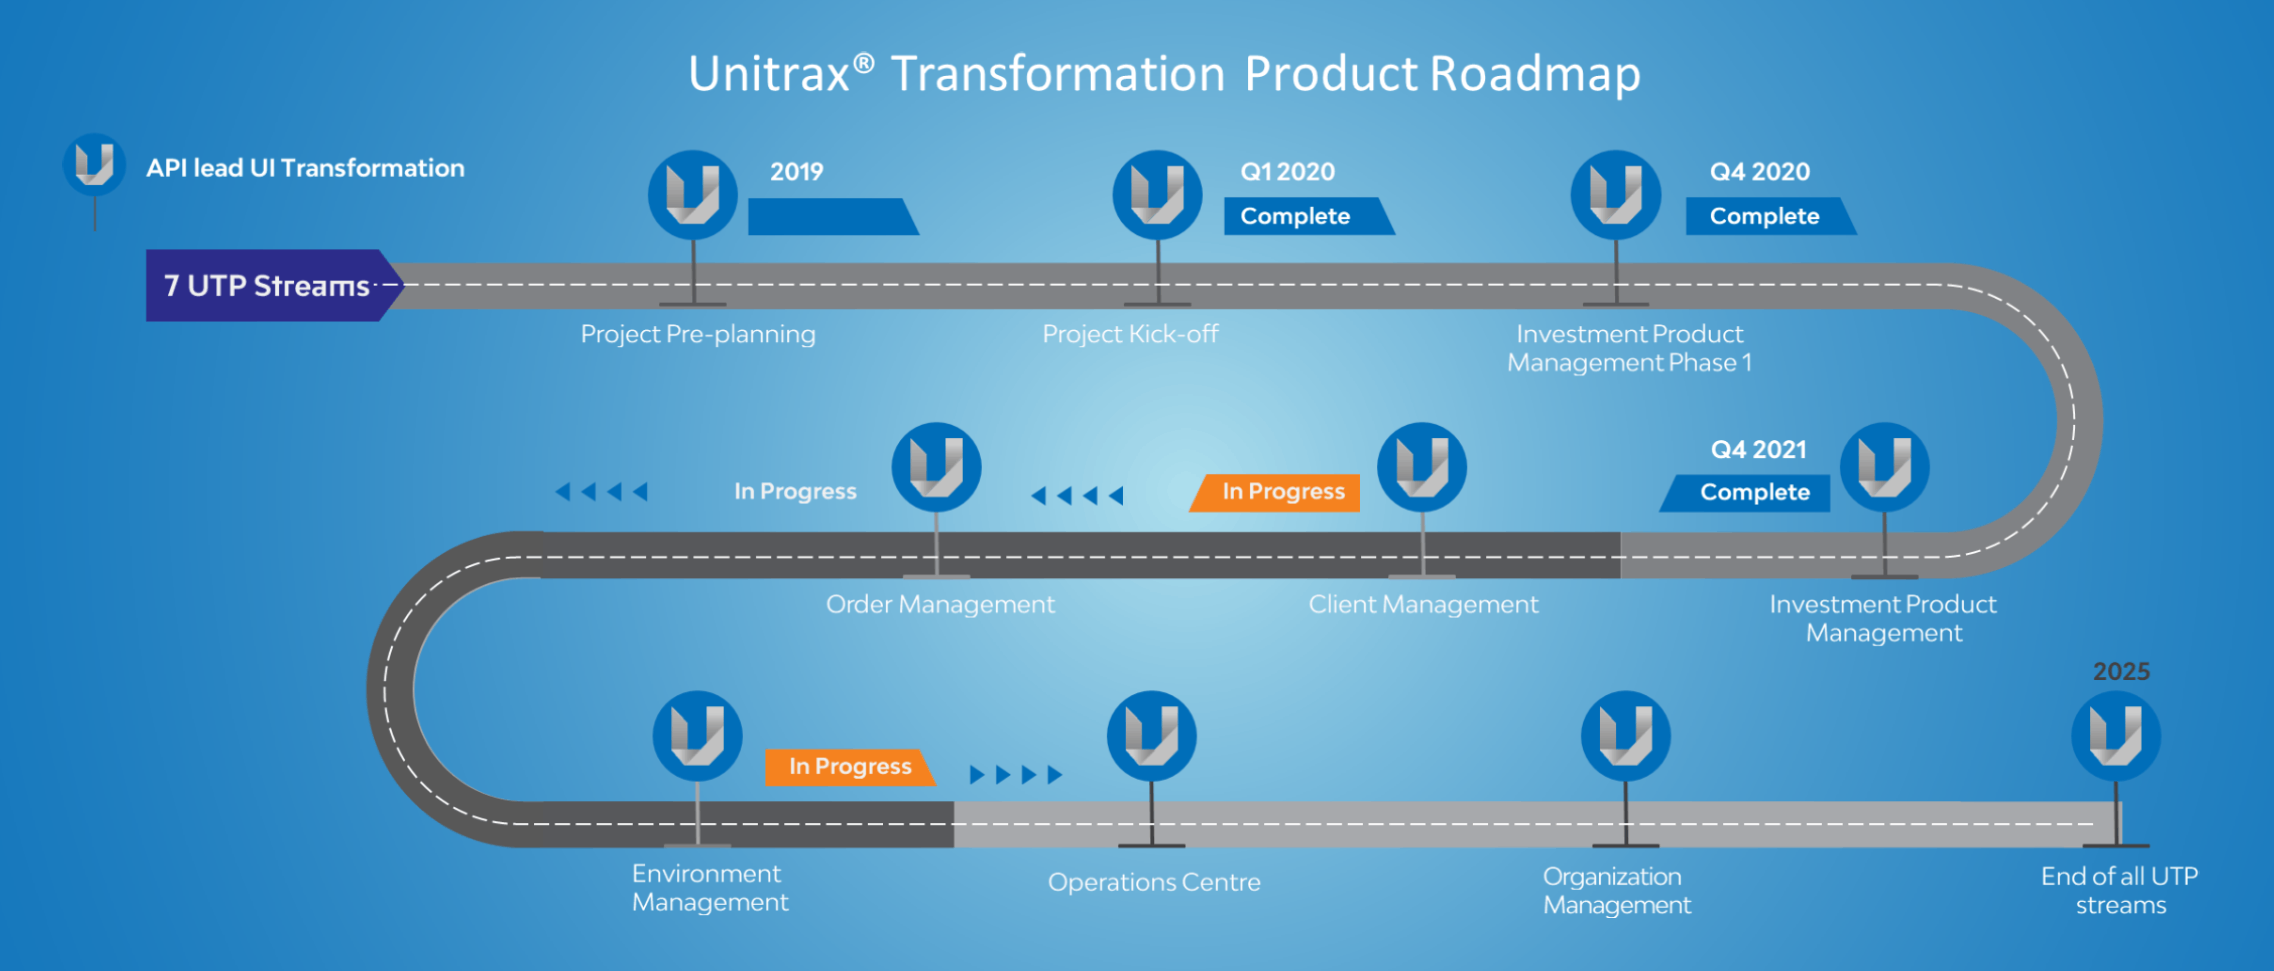 Unitrax® Transformation Product Roadmap